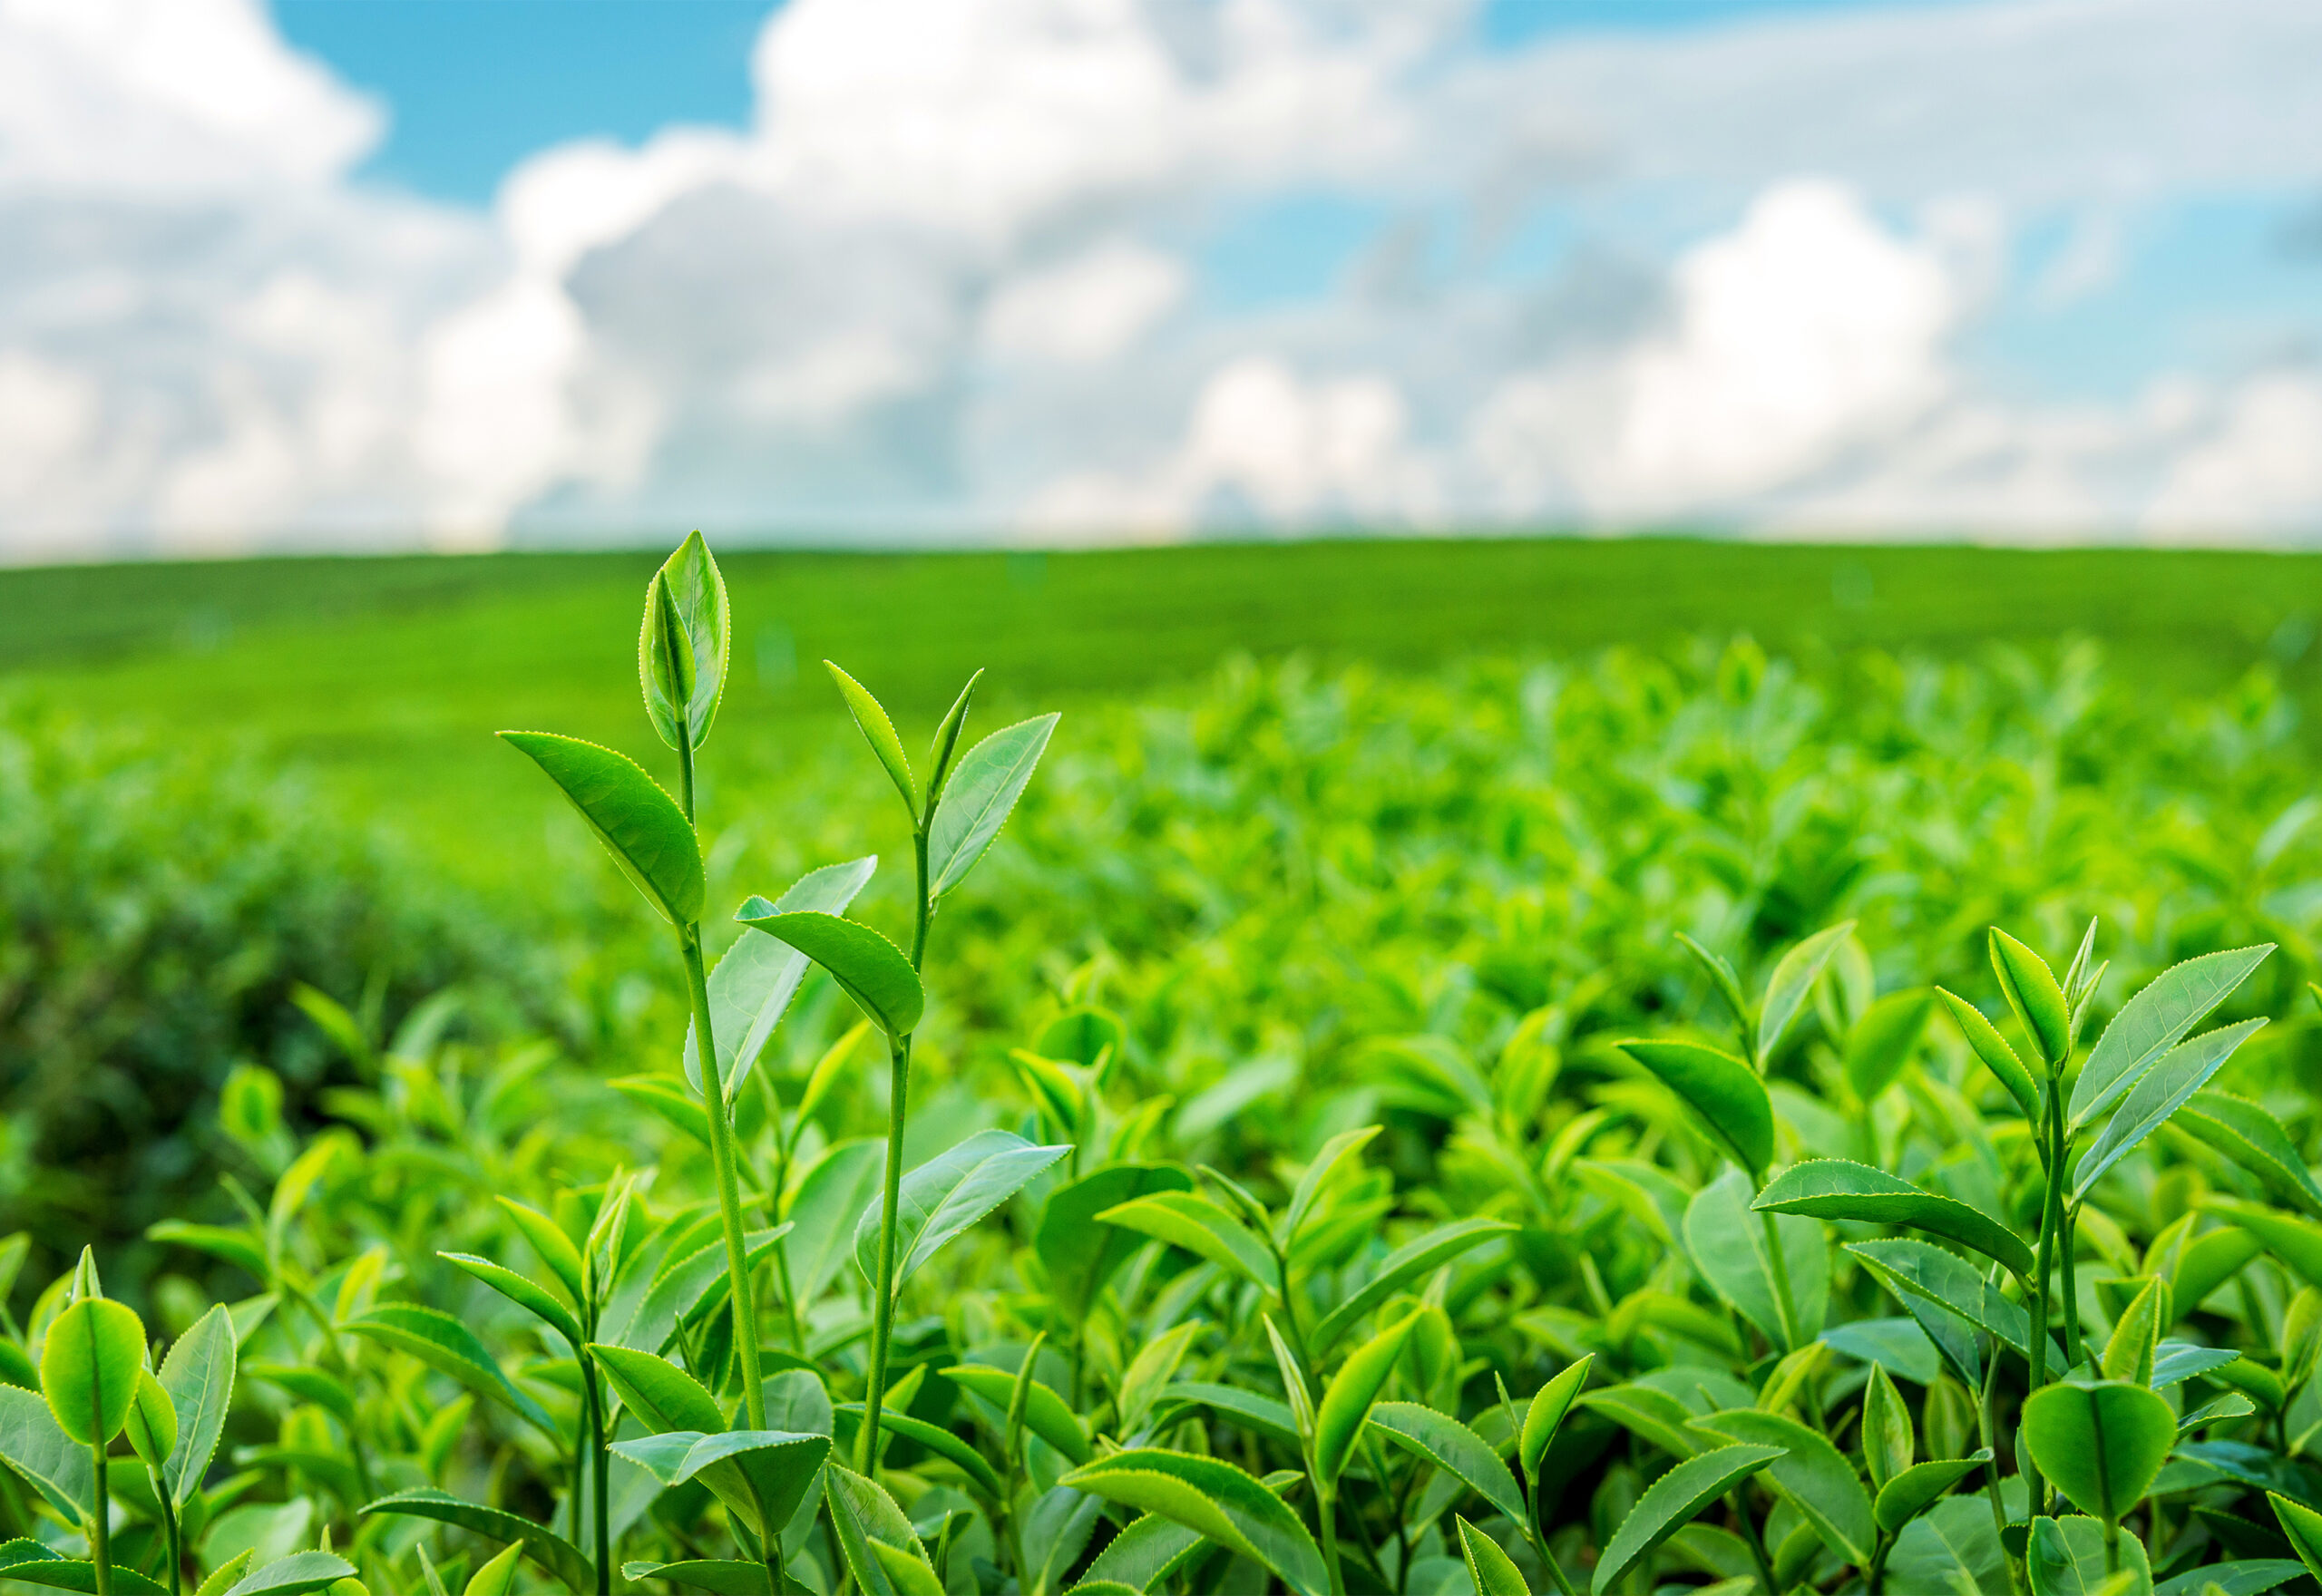 https://esg360.global/wp-content/uploads/2022/08/green-tea-bud-leaves-green-tea-plantations-morning-1-scaled.jpg